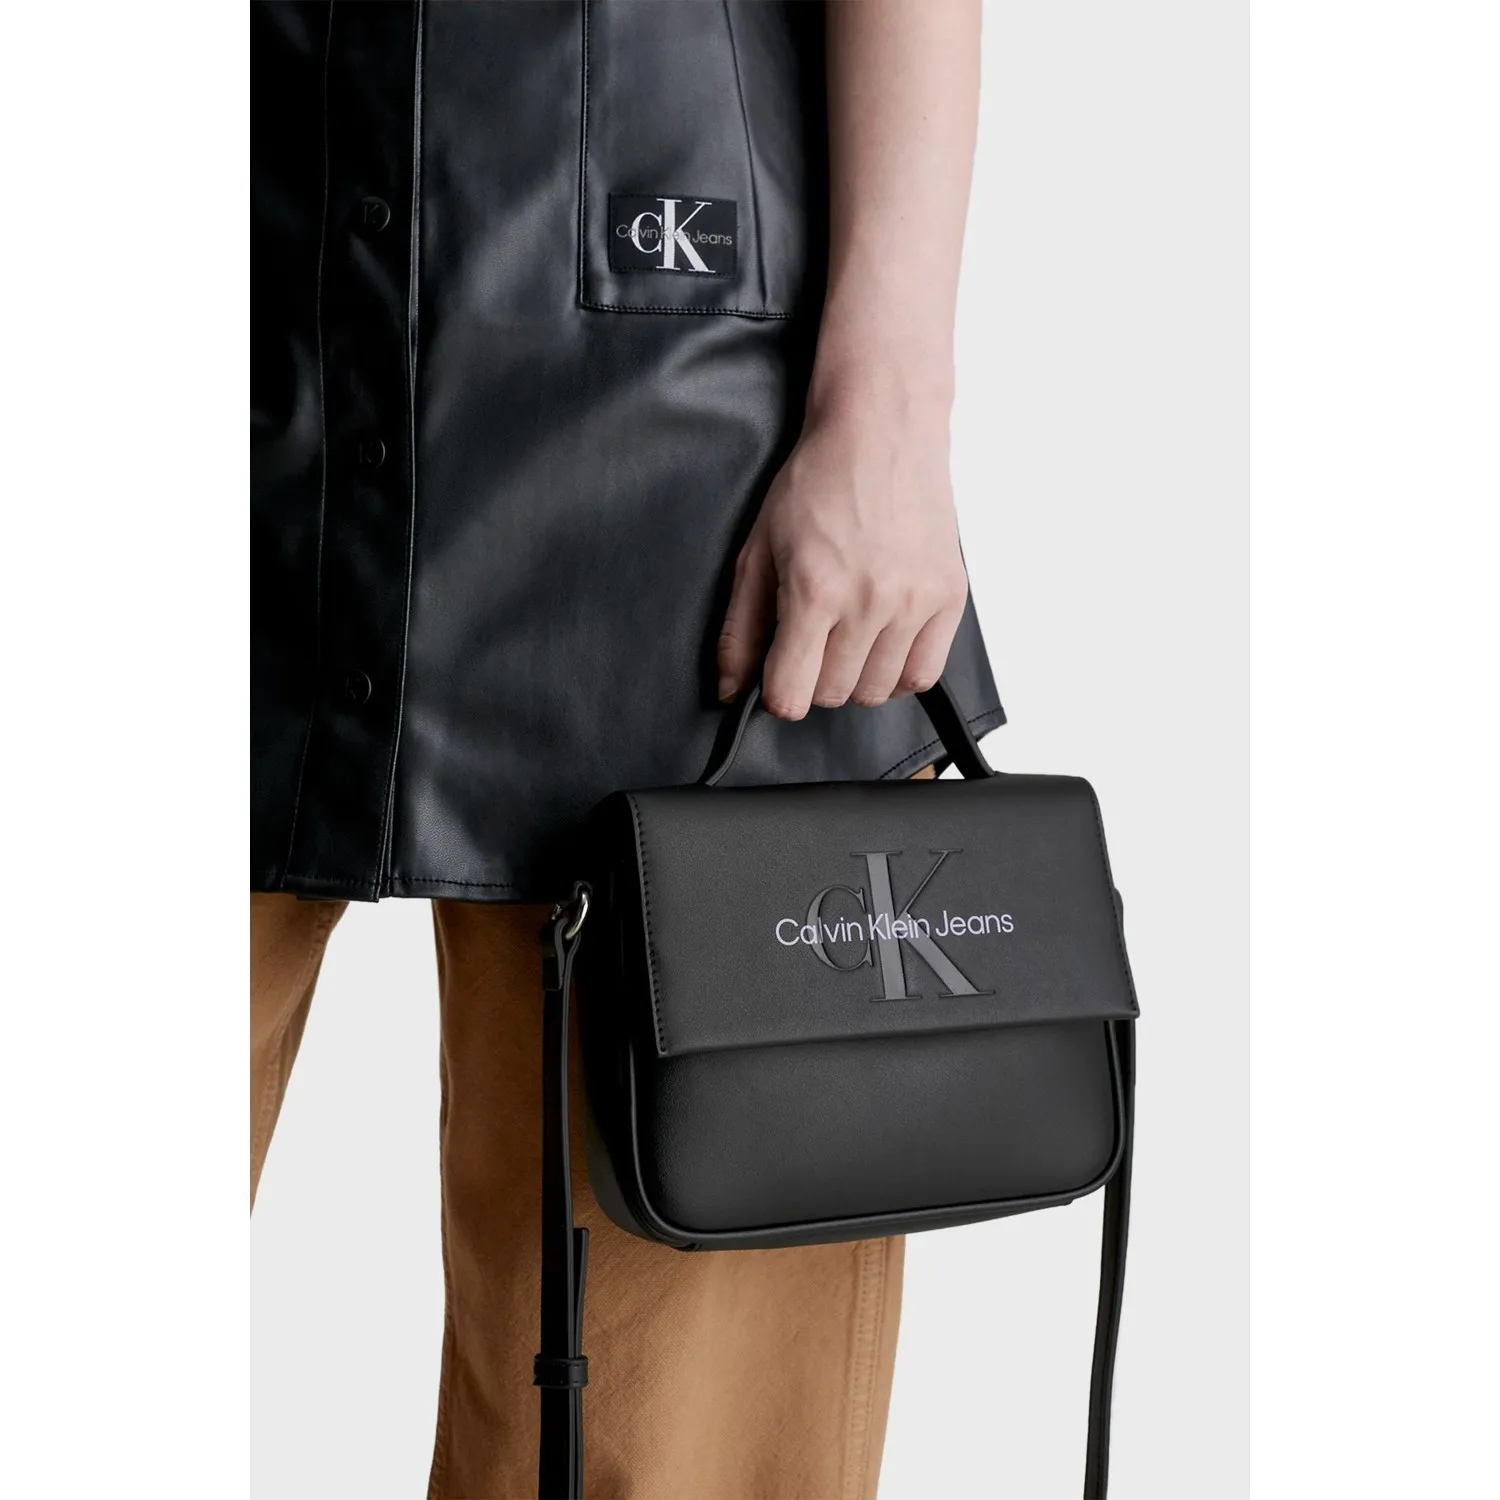 Sumka an with adjustable K60K6108290GJ Calvin shoulder 0gj K60K610829 AliExpress belt bag Klein - woman